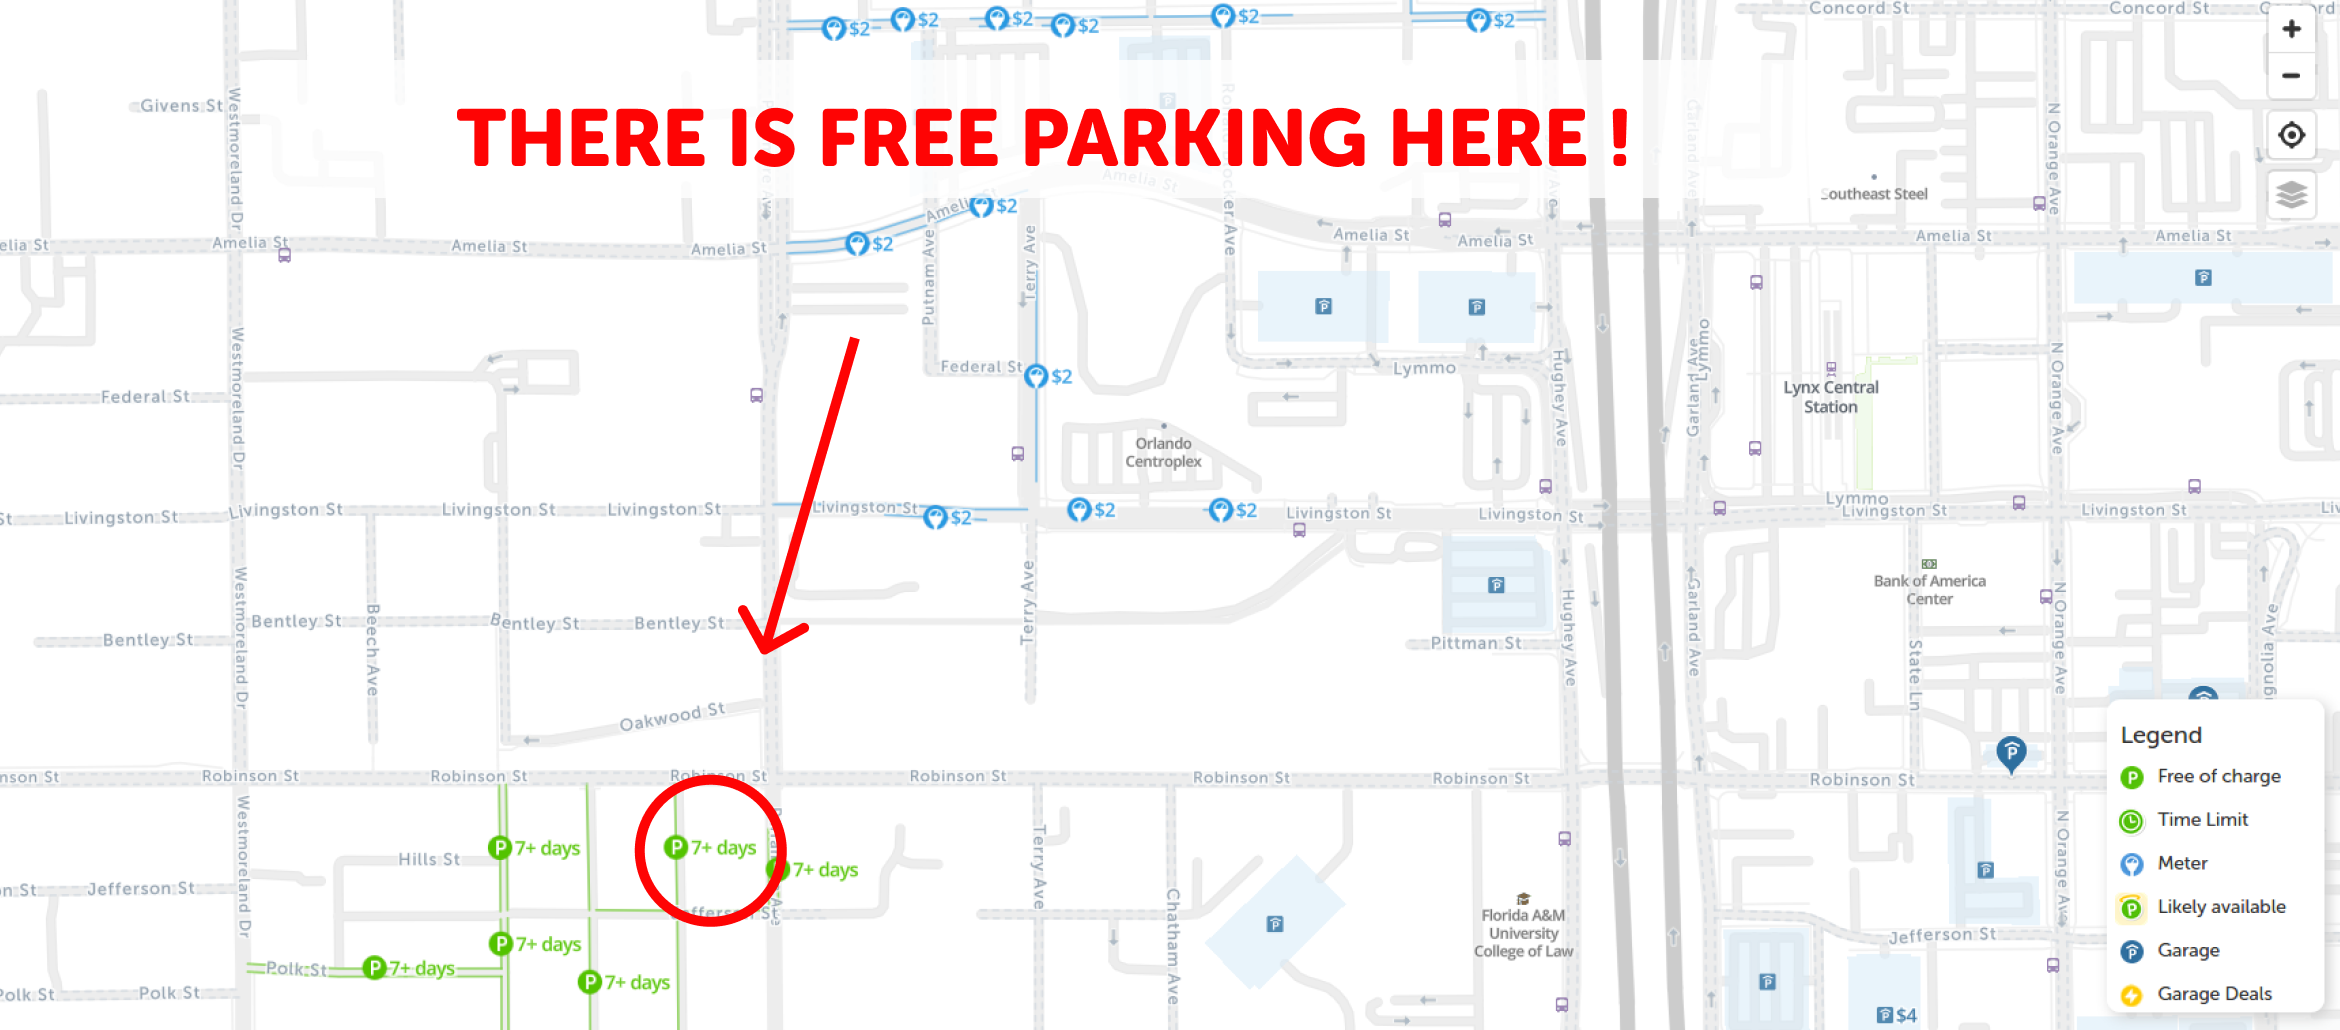 map of free parking in Orlando - SpotAngels